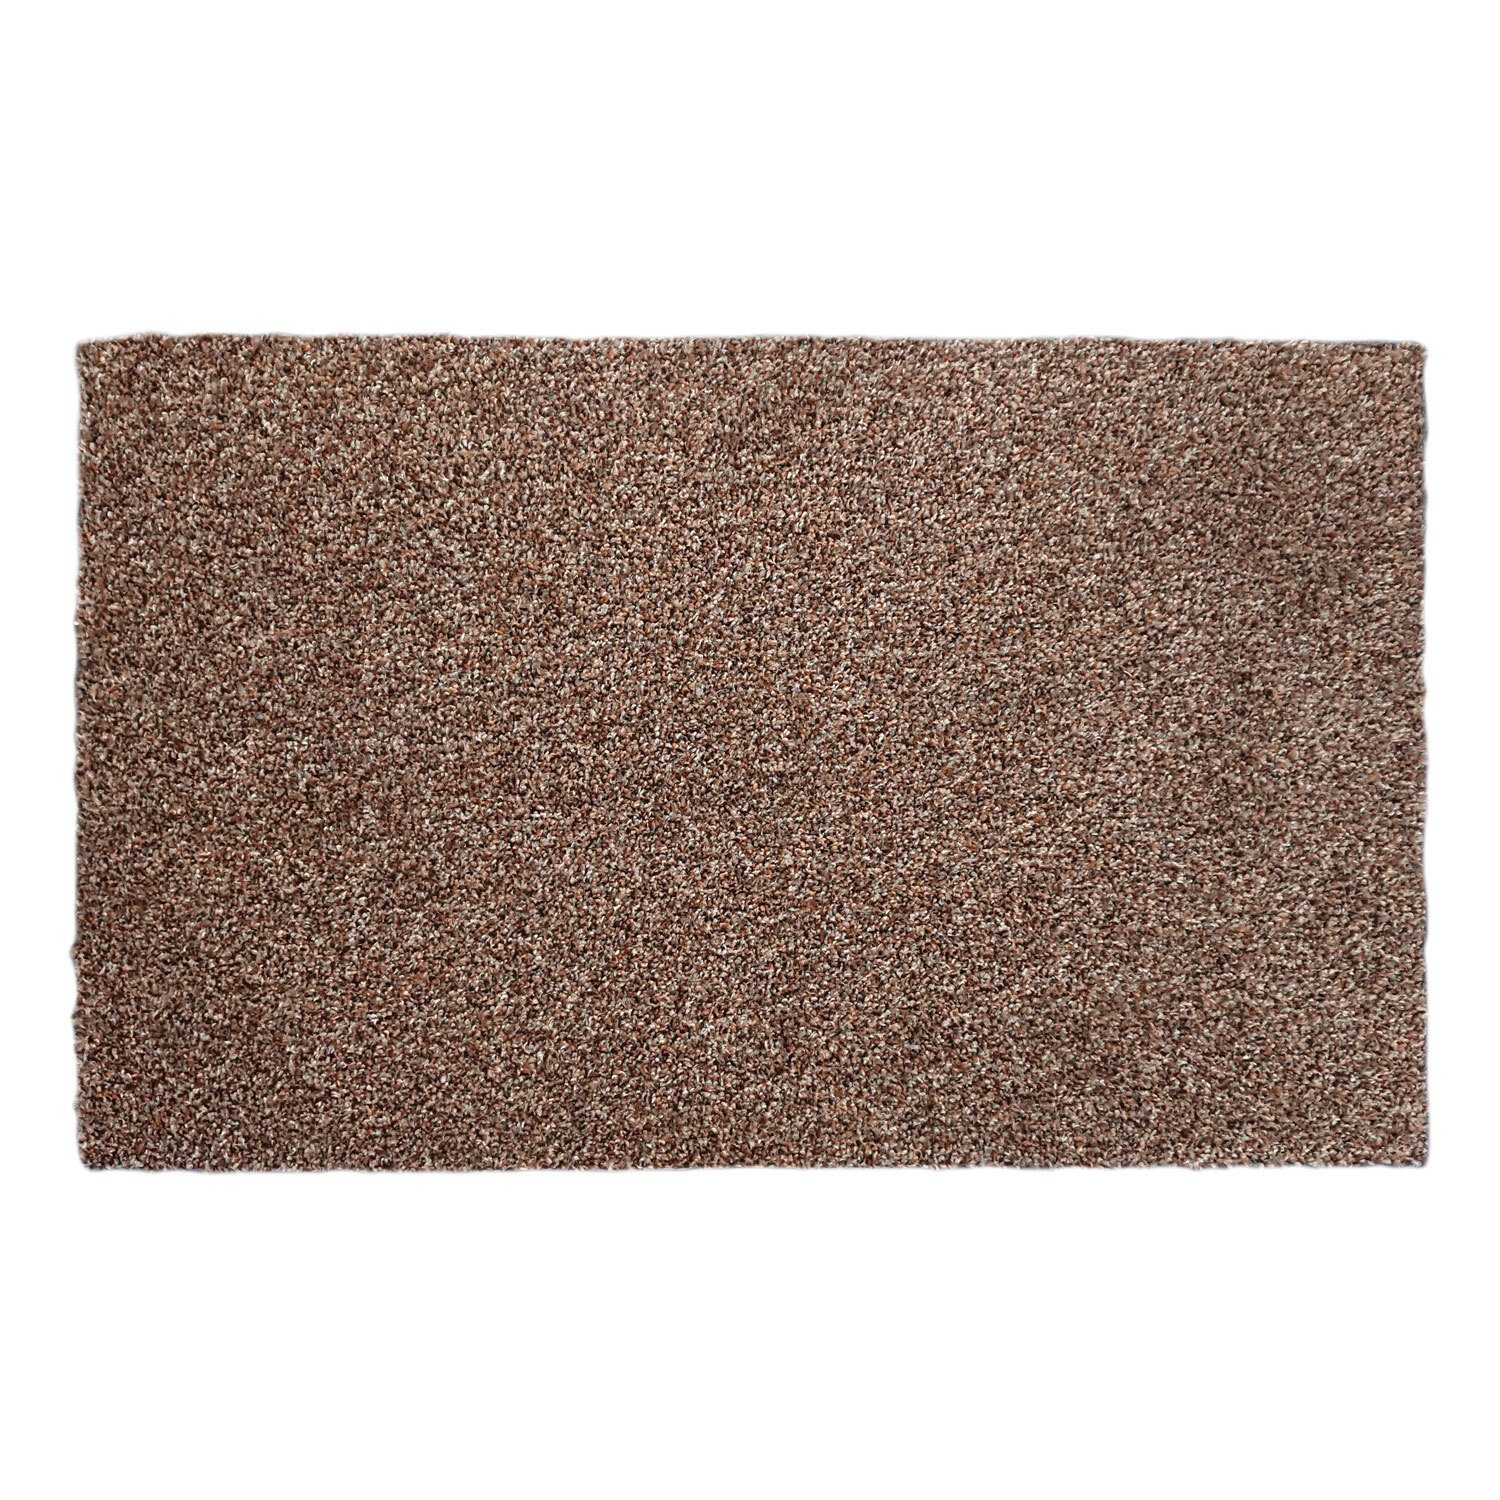 Single Primeur Mud Master Doormat 90 x 60cm in Assorted styles Image 2